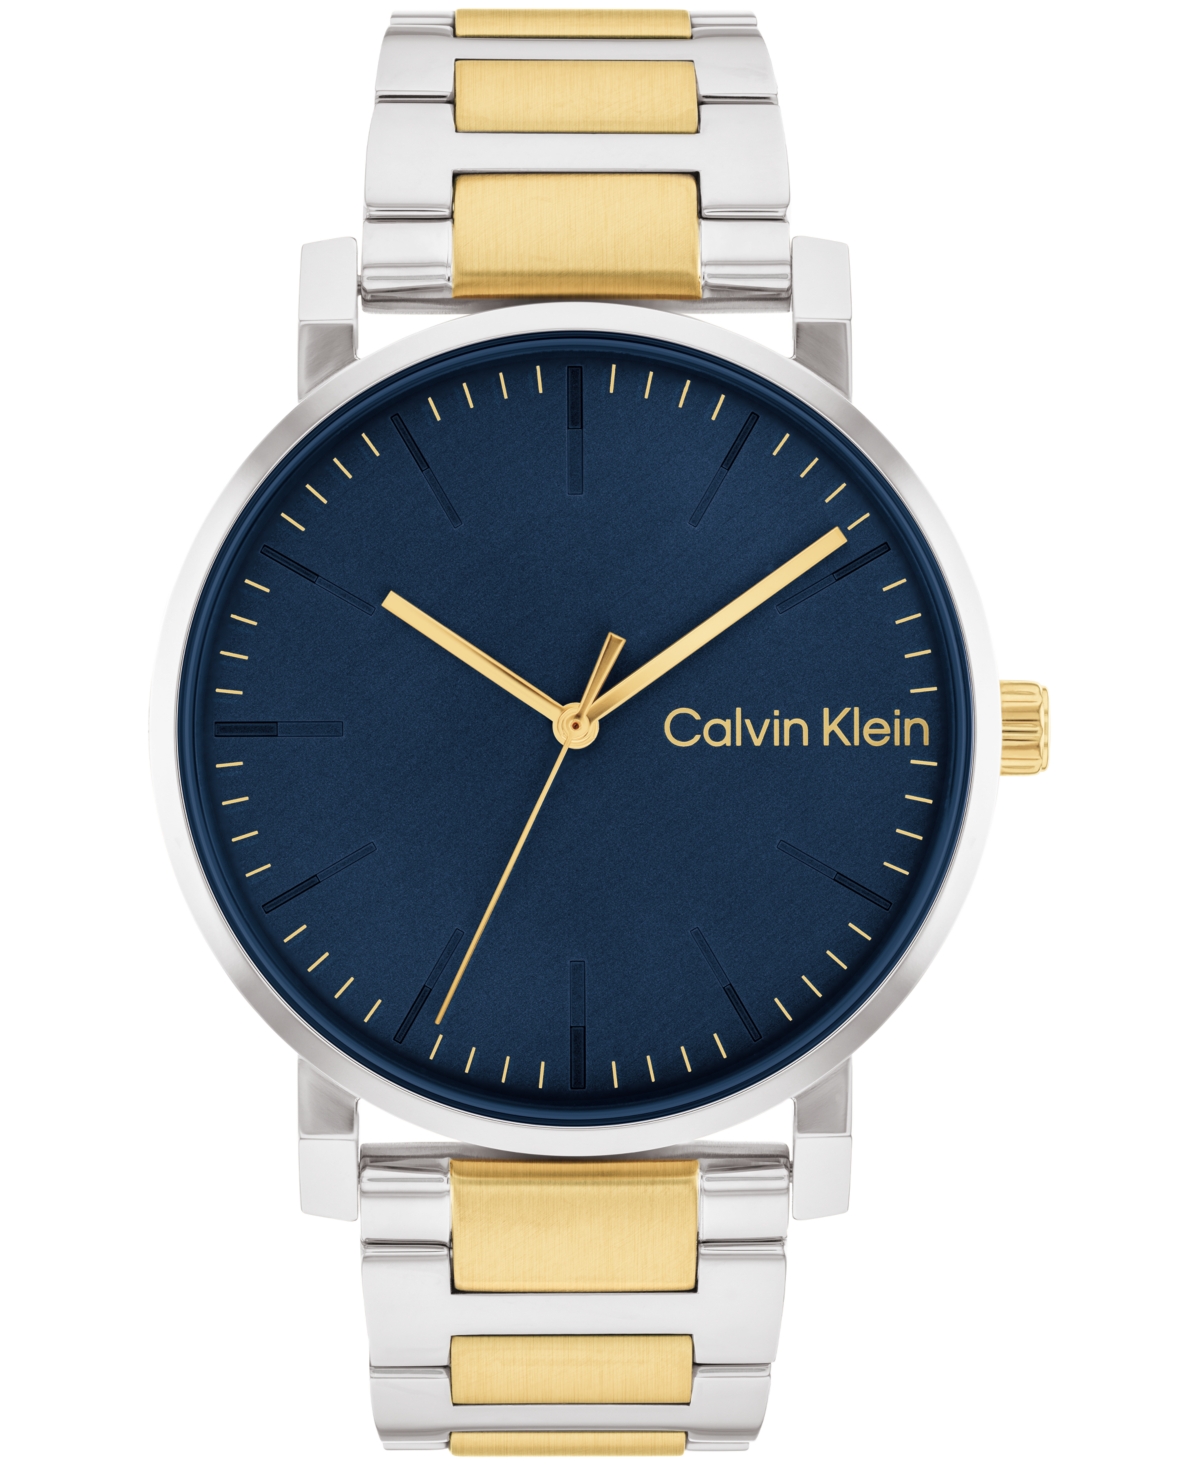 Calvin Klein Men's 3-hand Two-tone Stainless Steel Bracelet Watch 43mm